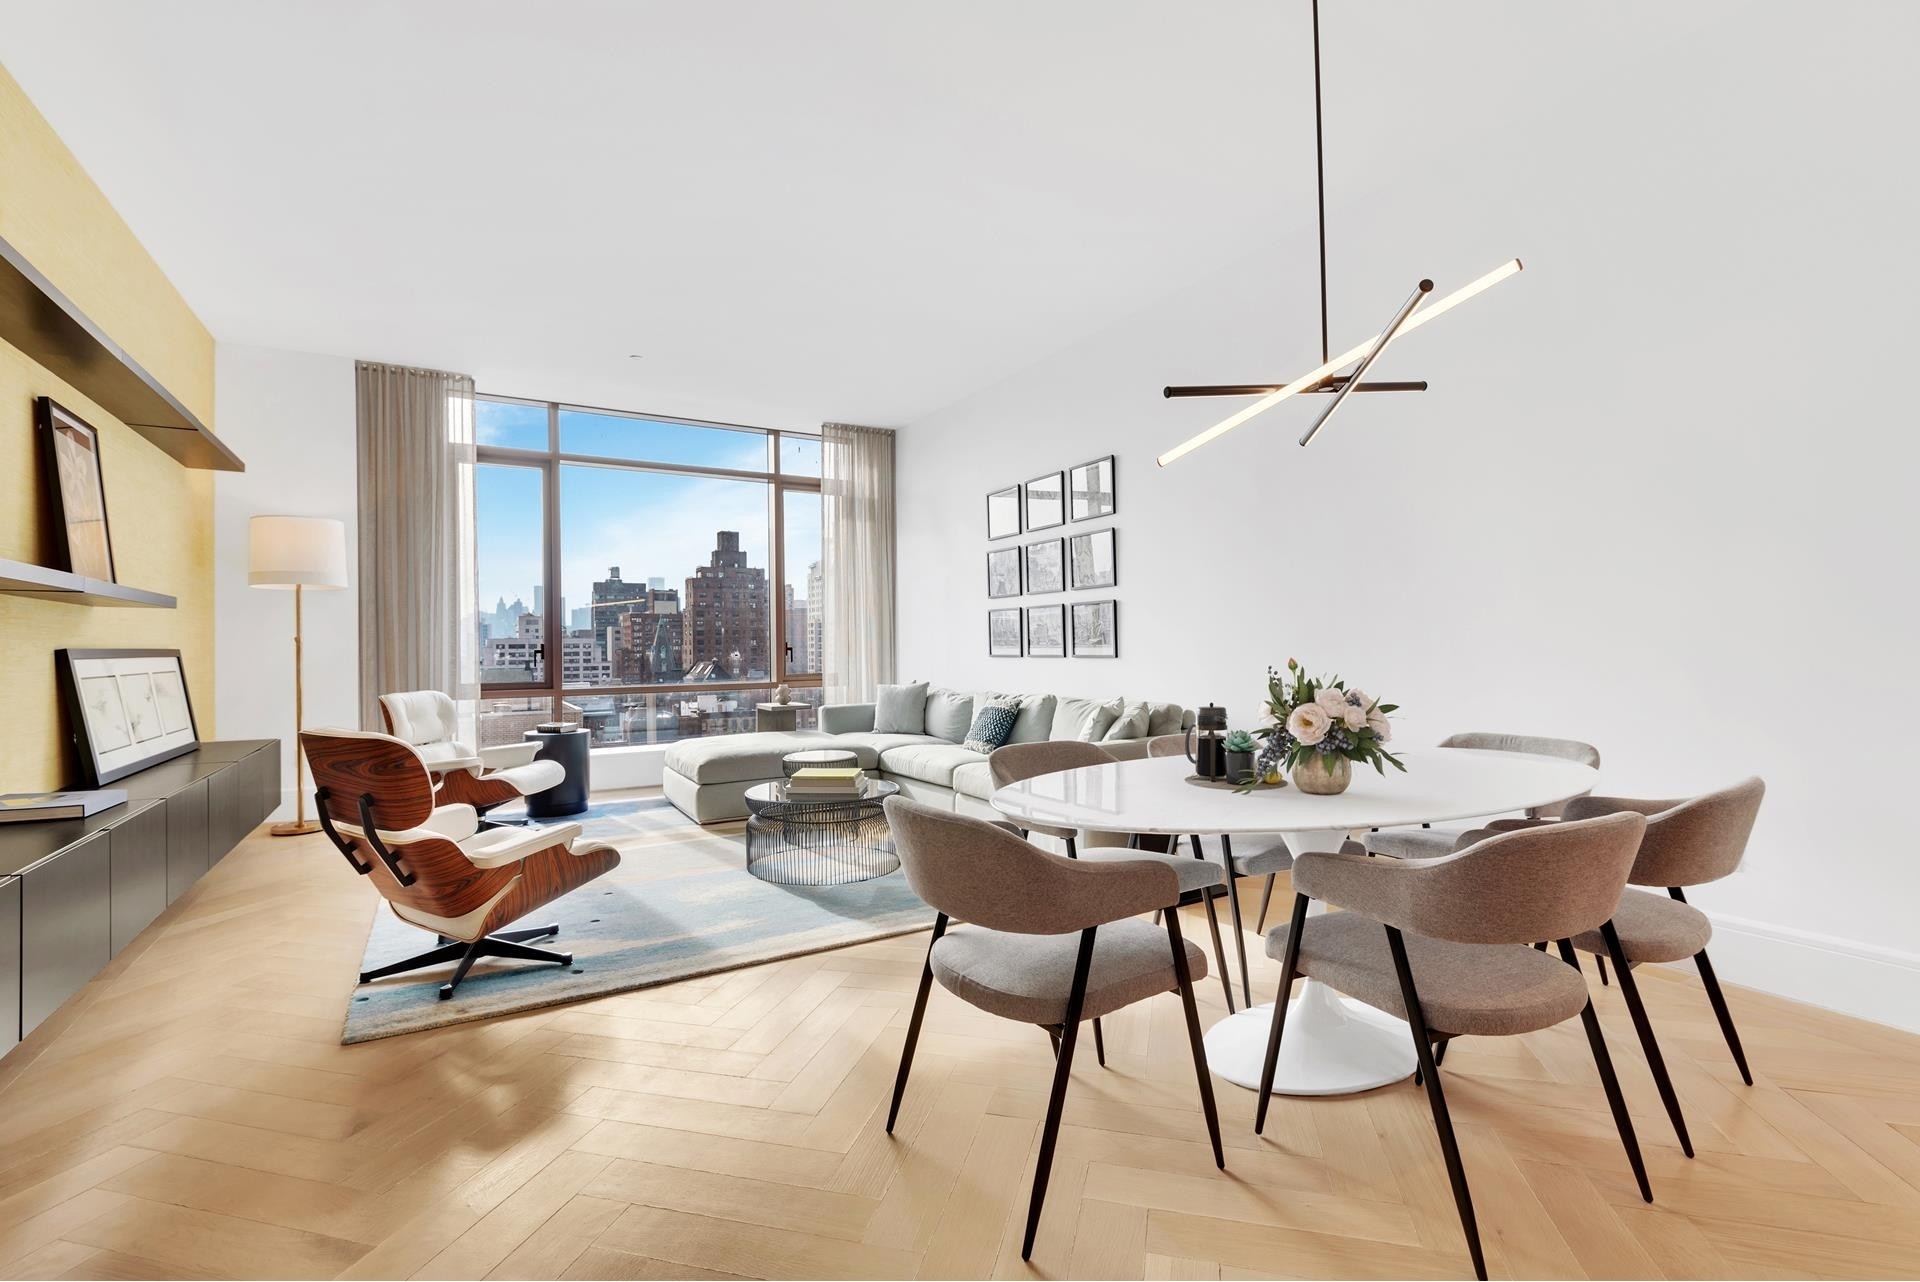 Condominium for Sale at Gramercy Square, 215 E 19TH ST, 2H Gramercy Park, New York, NY 10003